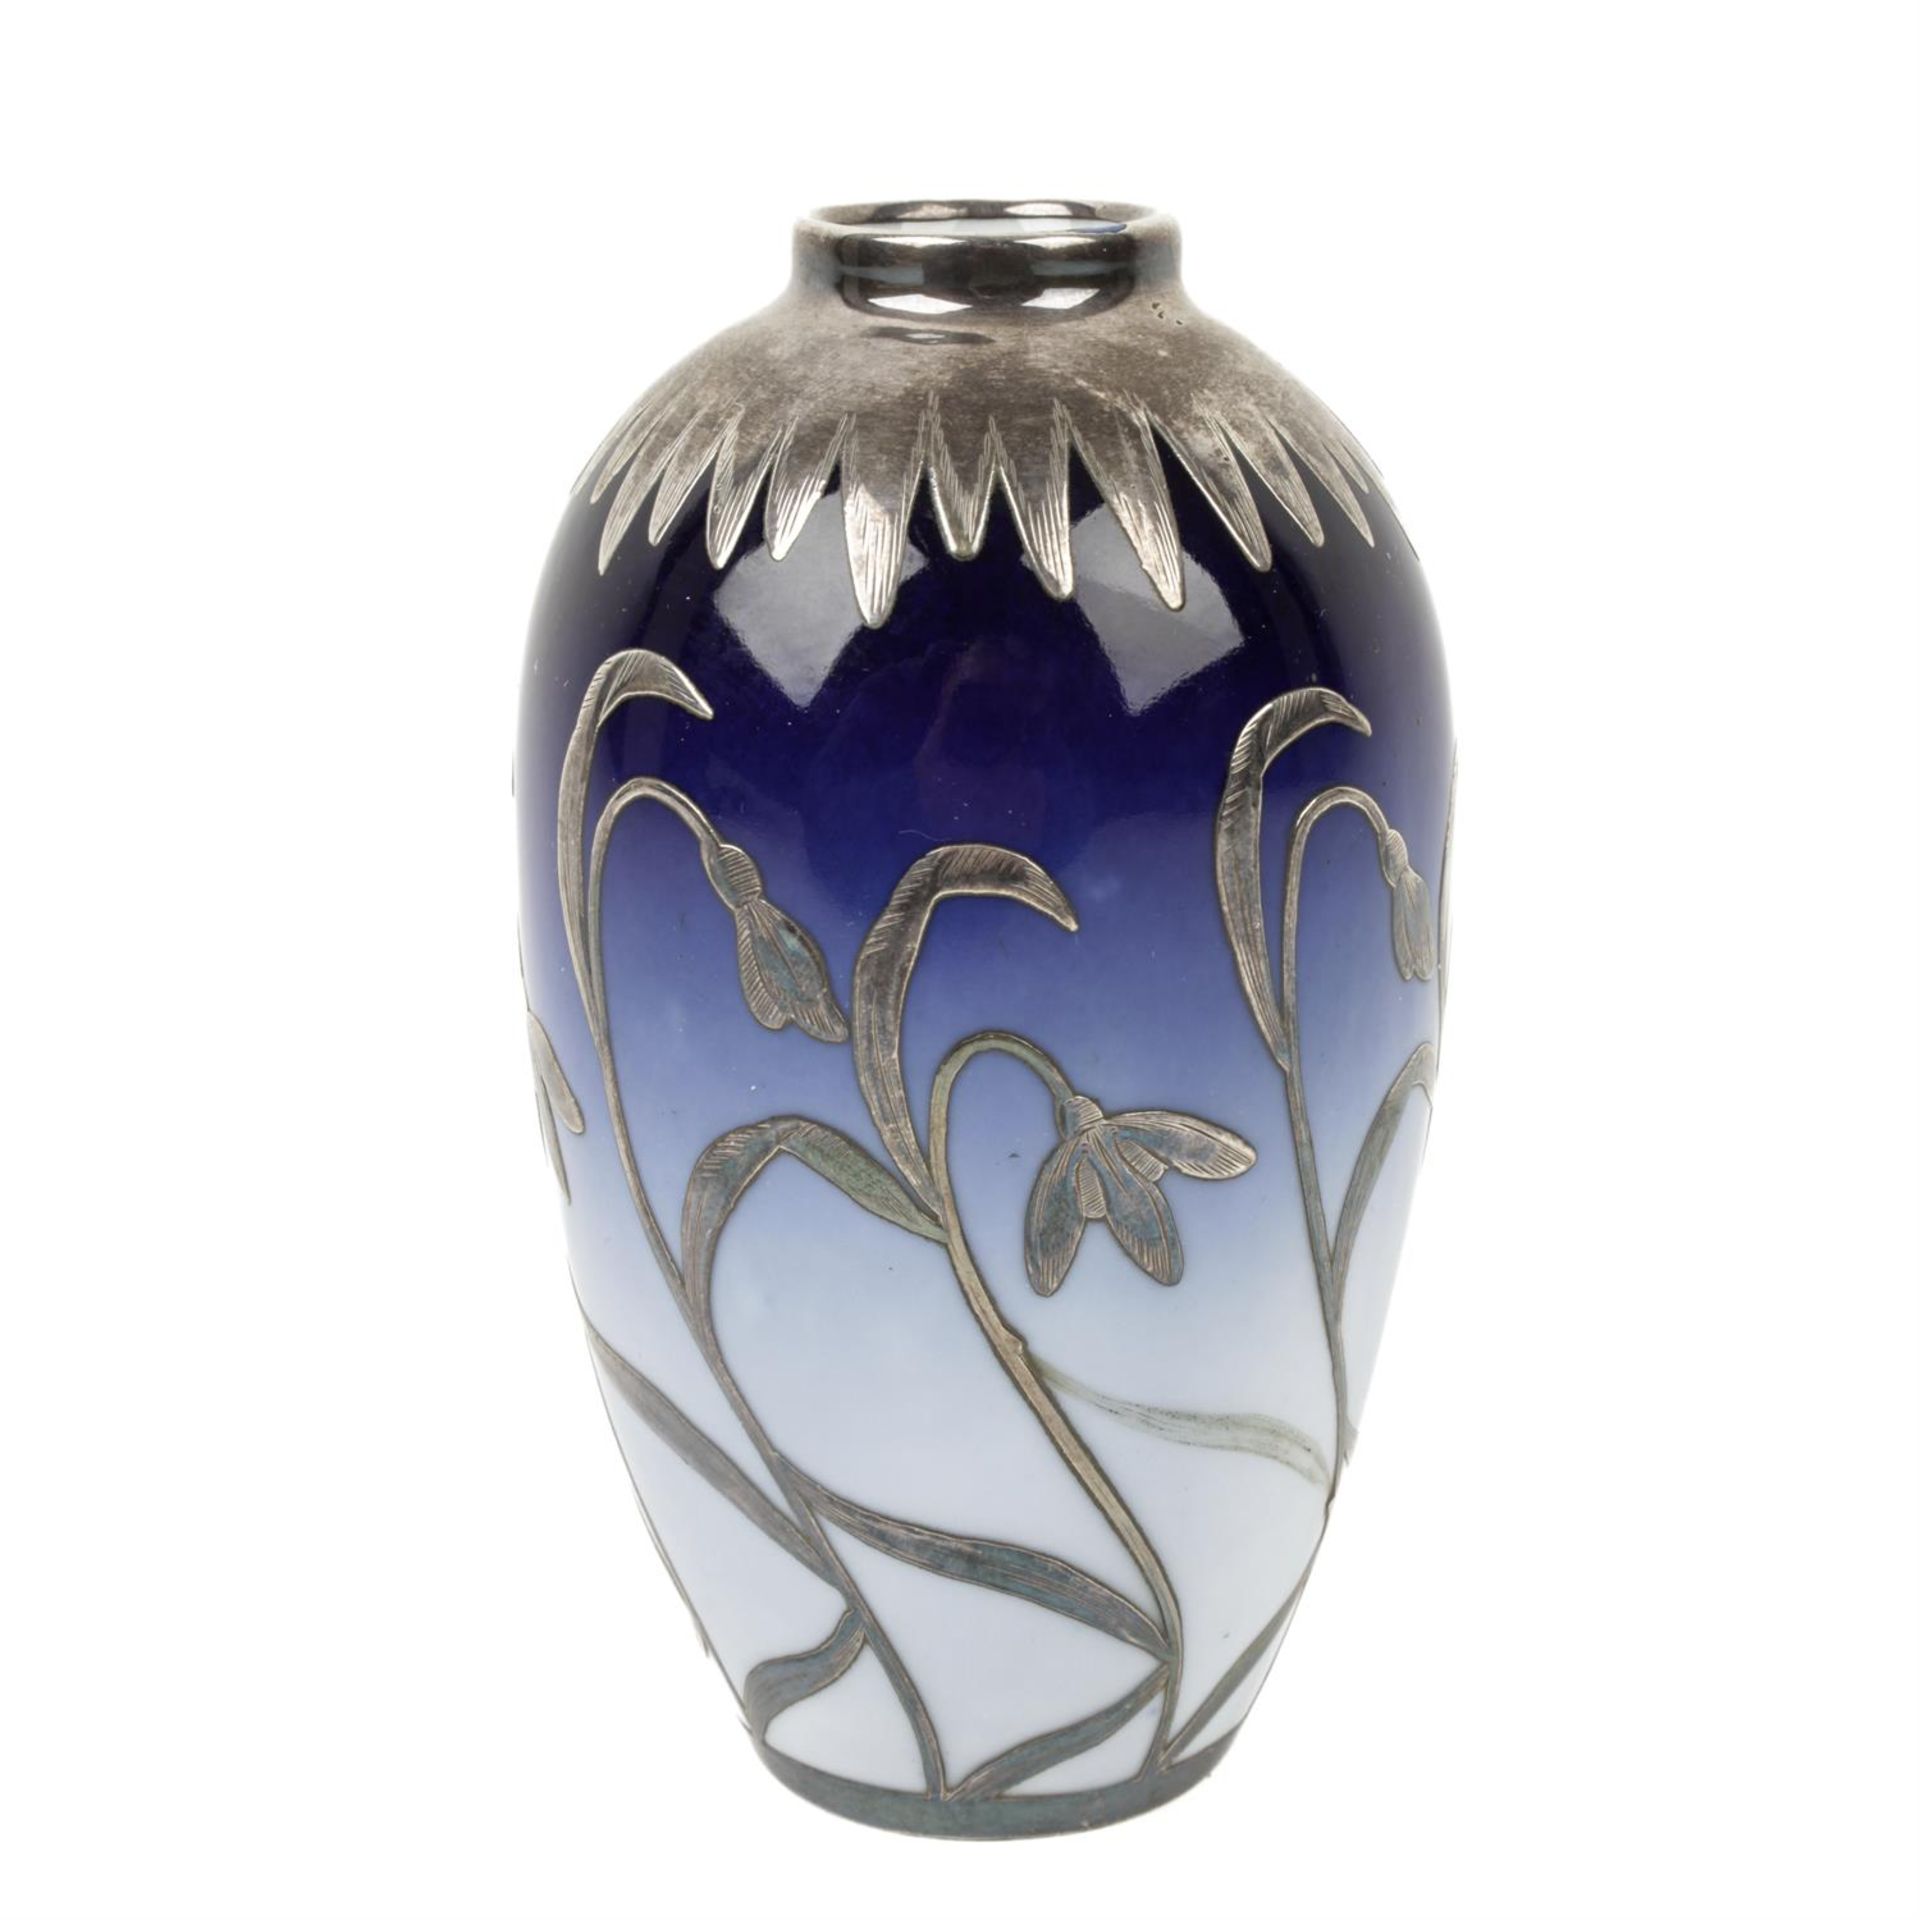 Rosenthal Art Nouveau overlay vase - Image 2 of 4